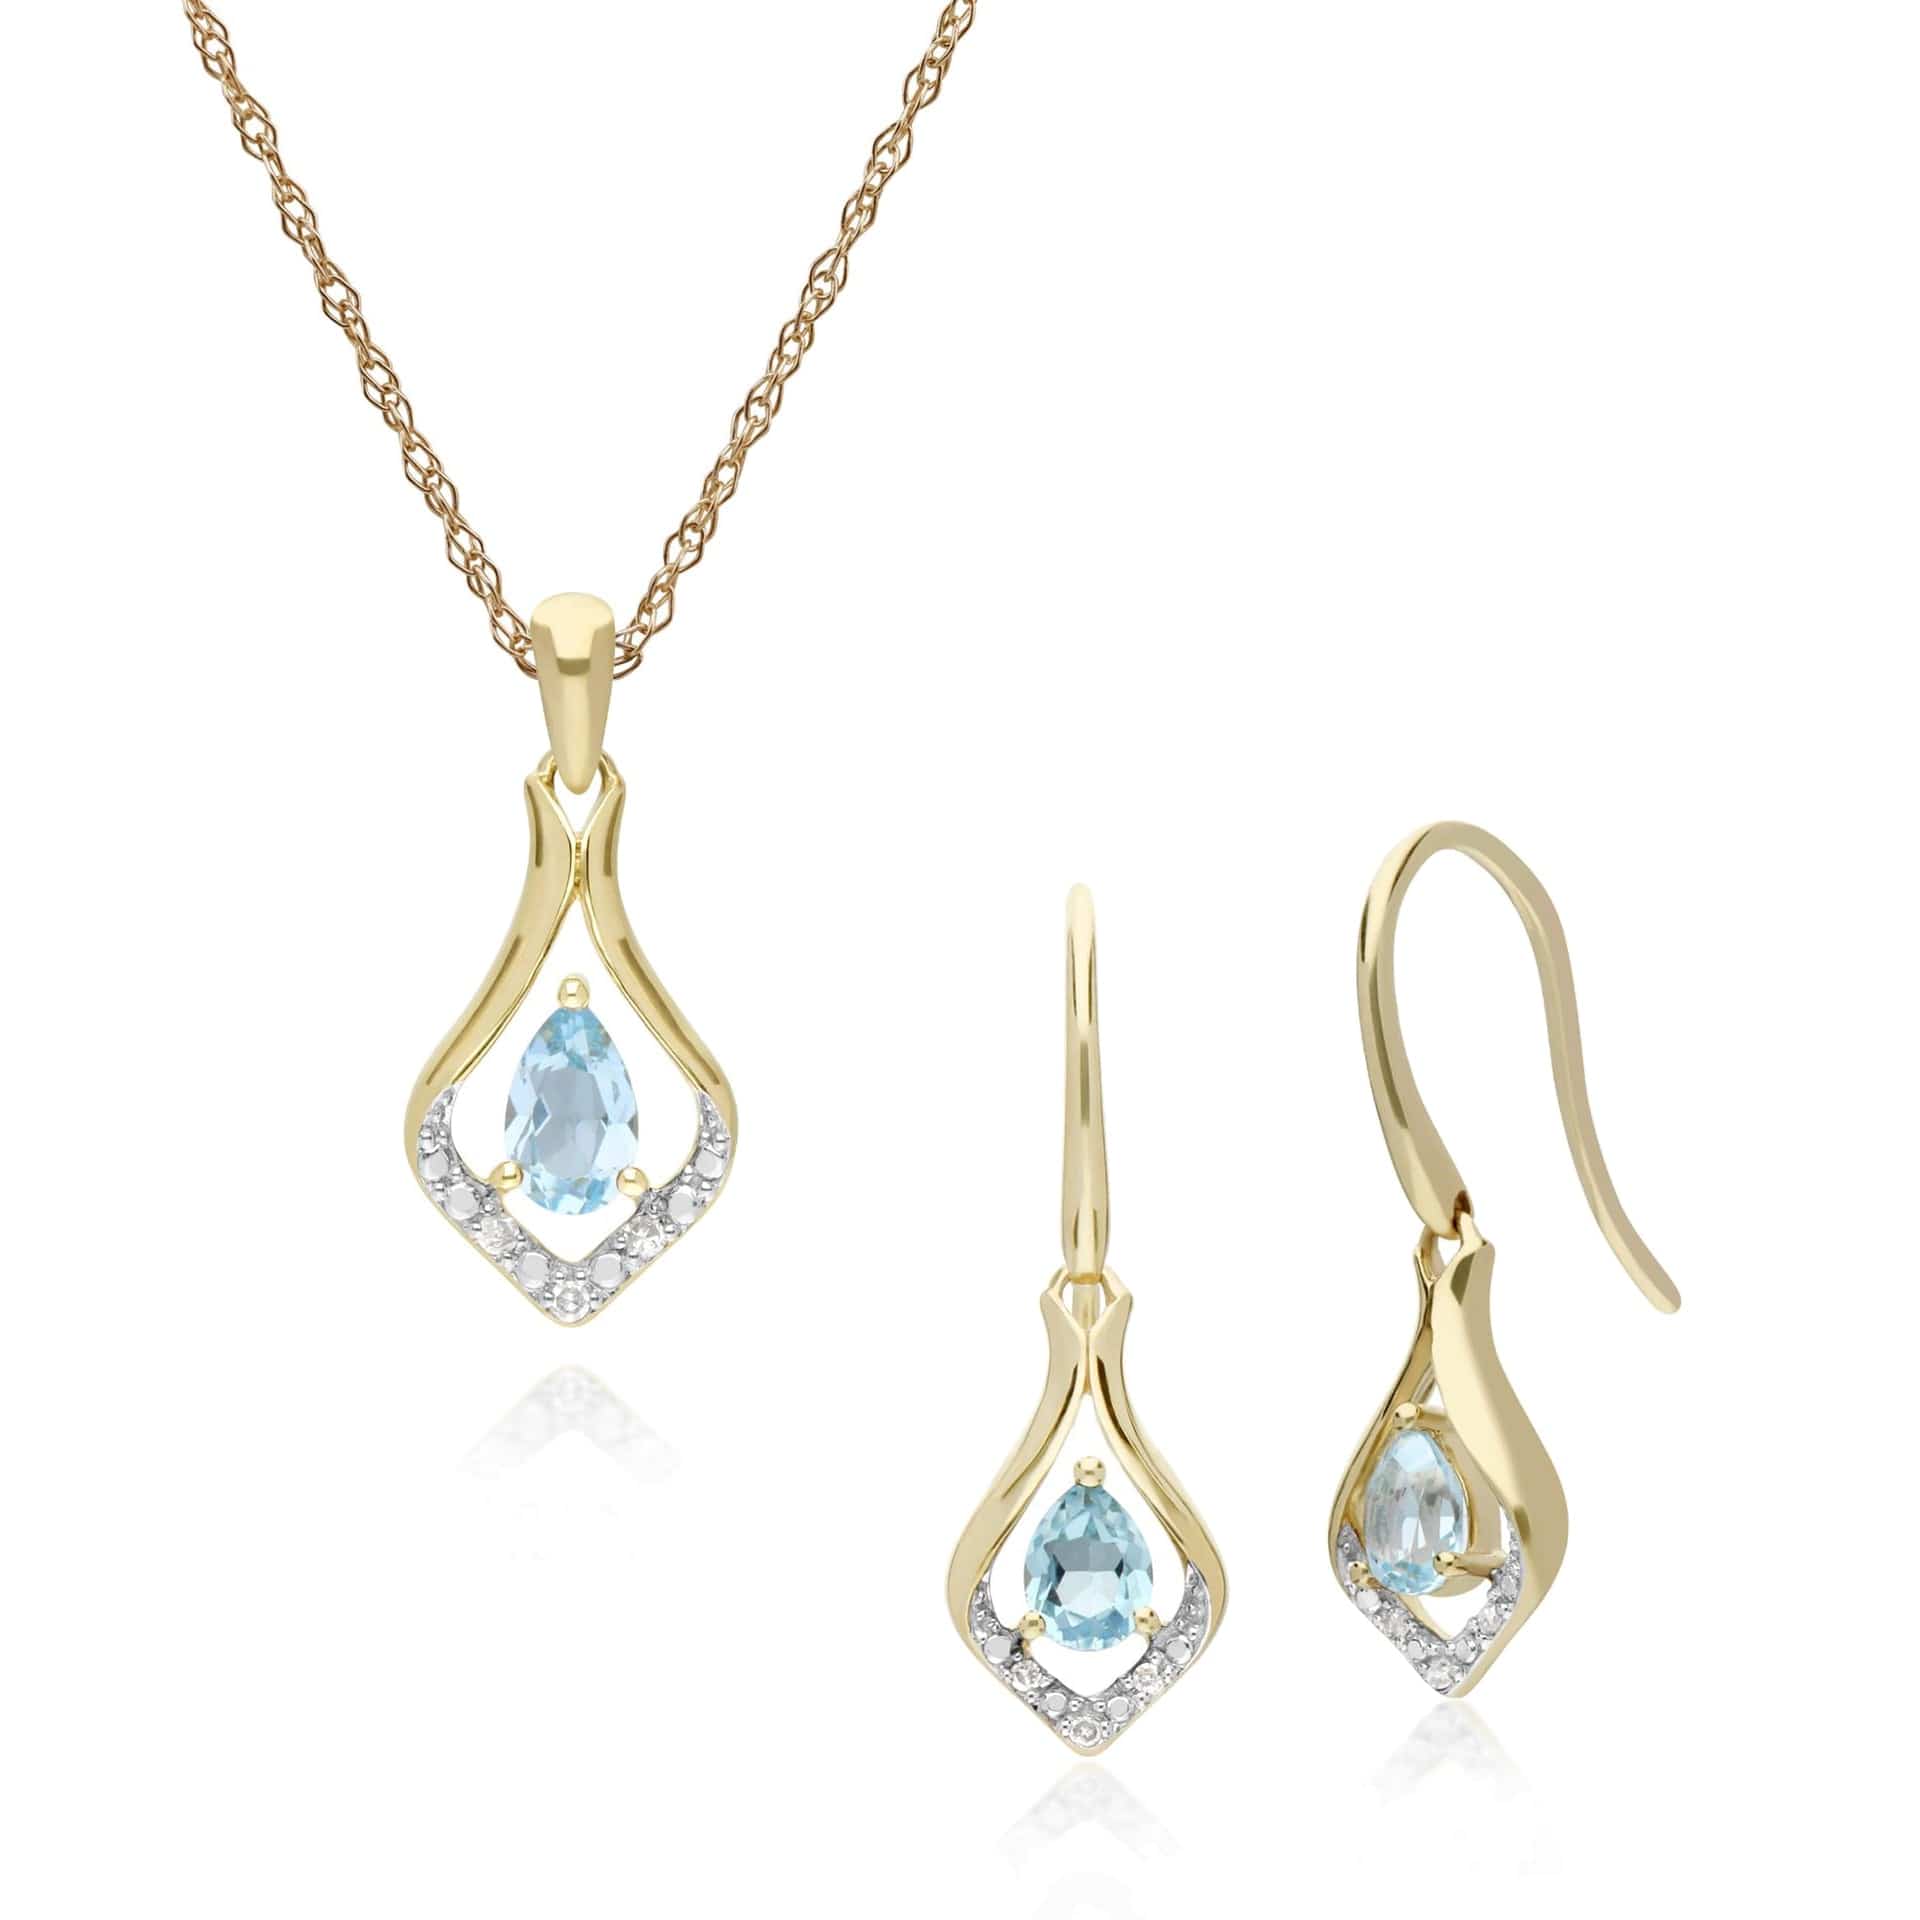 135E1577069-135P1915069 Classic Oval Blue Topaz & Diamond Leaf Drop Earrings & Pendant Set in 9ct Yellow Gold 1